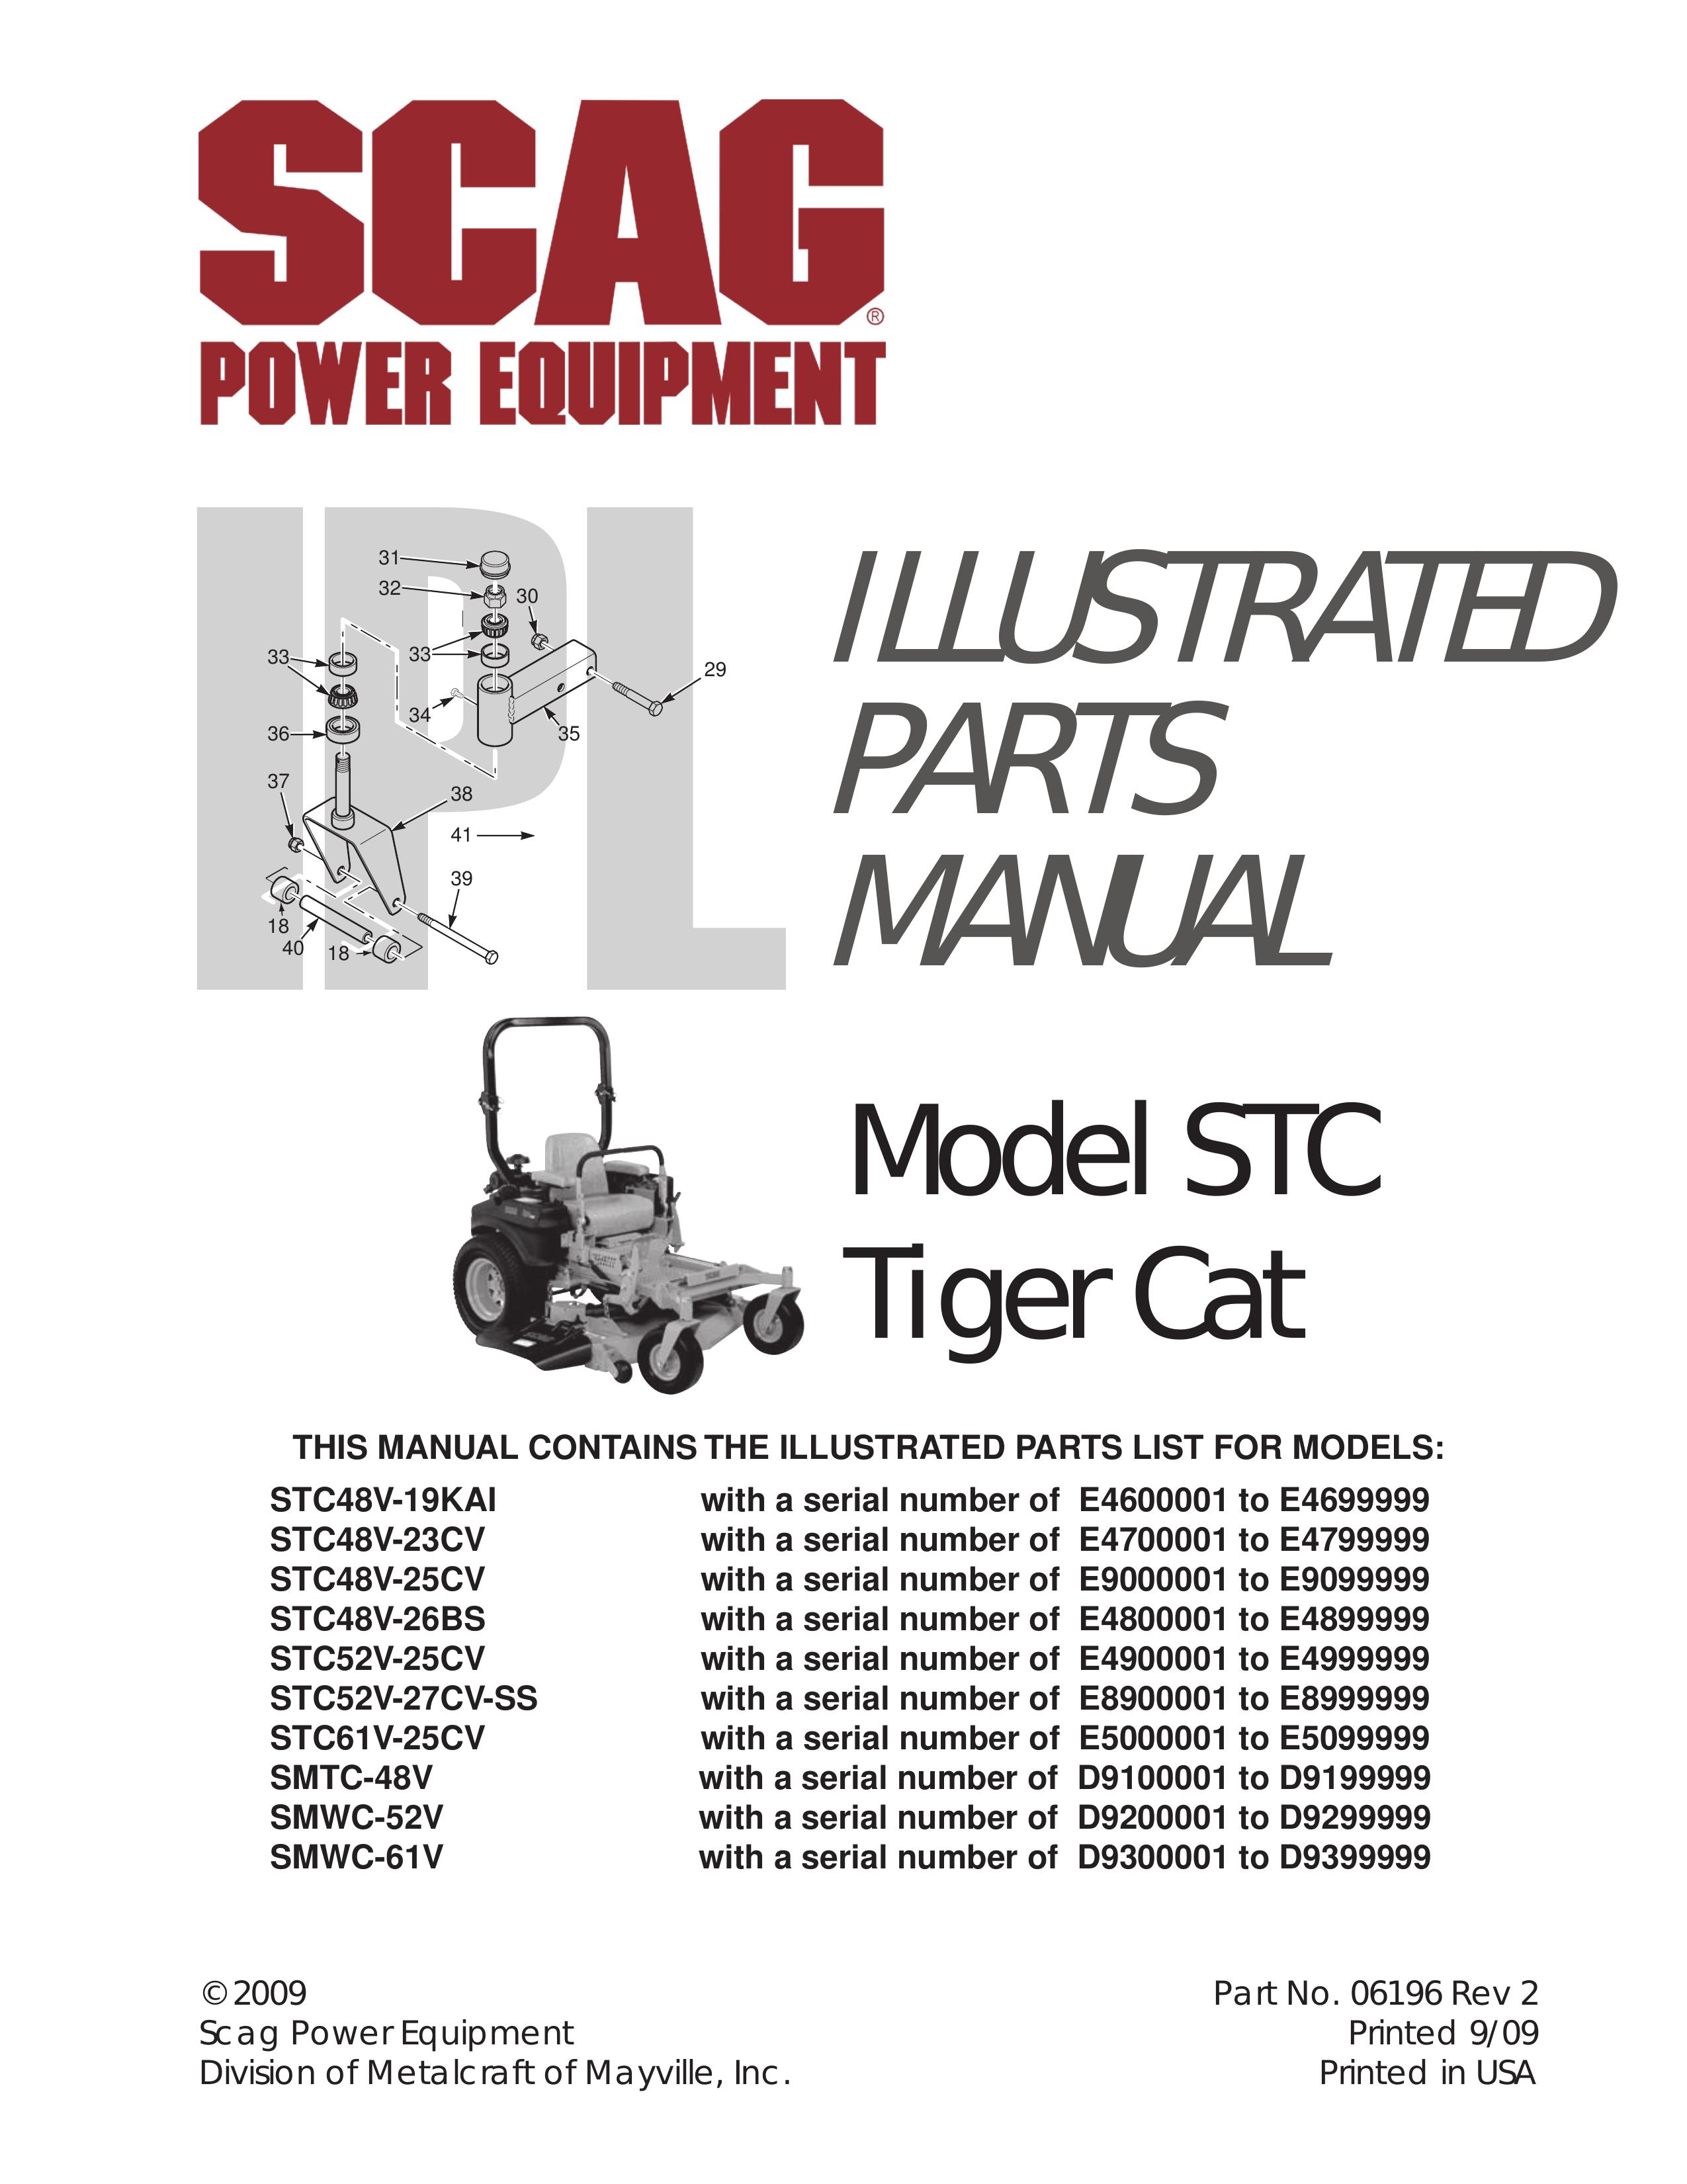 Scag Power Equipment SMWC-52V Lawn Mower User Manual